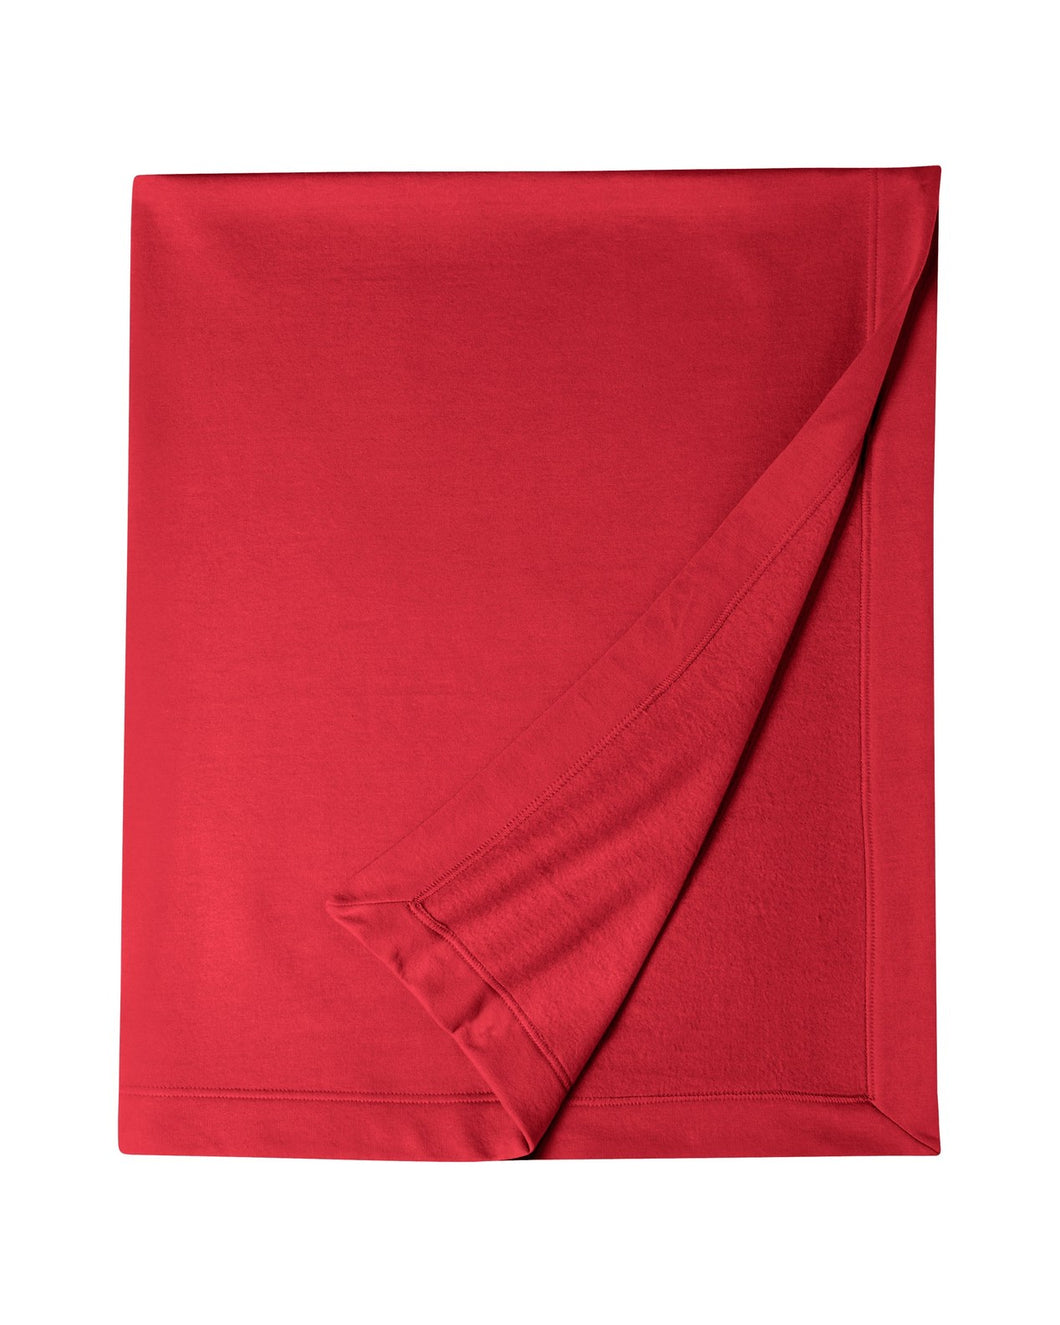 Red Sweatshirt Blanket w/Personalization